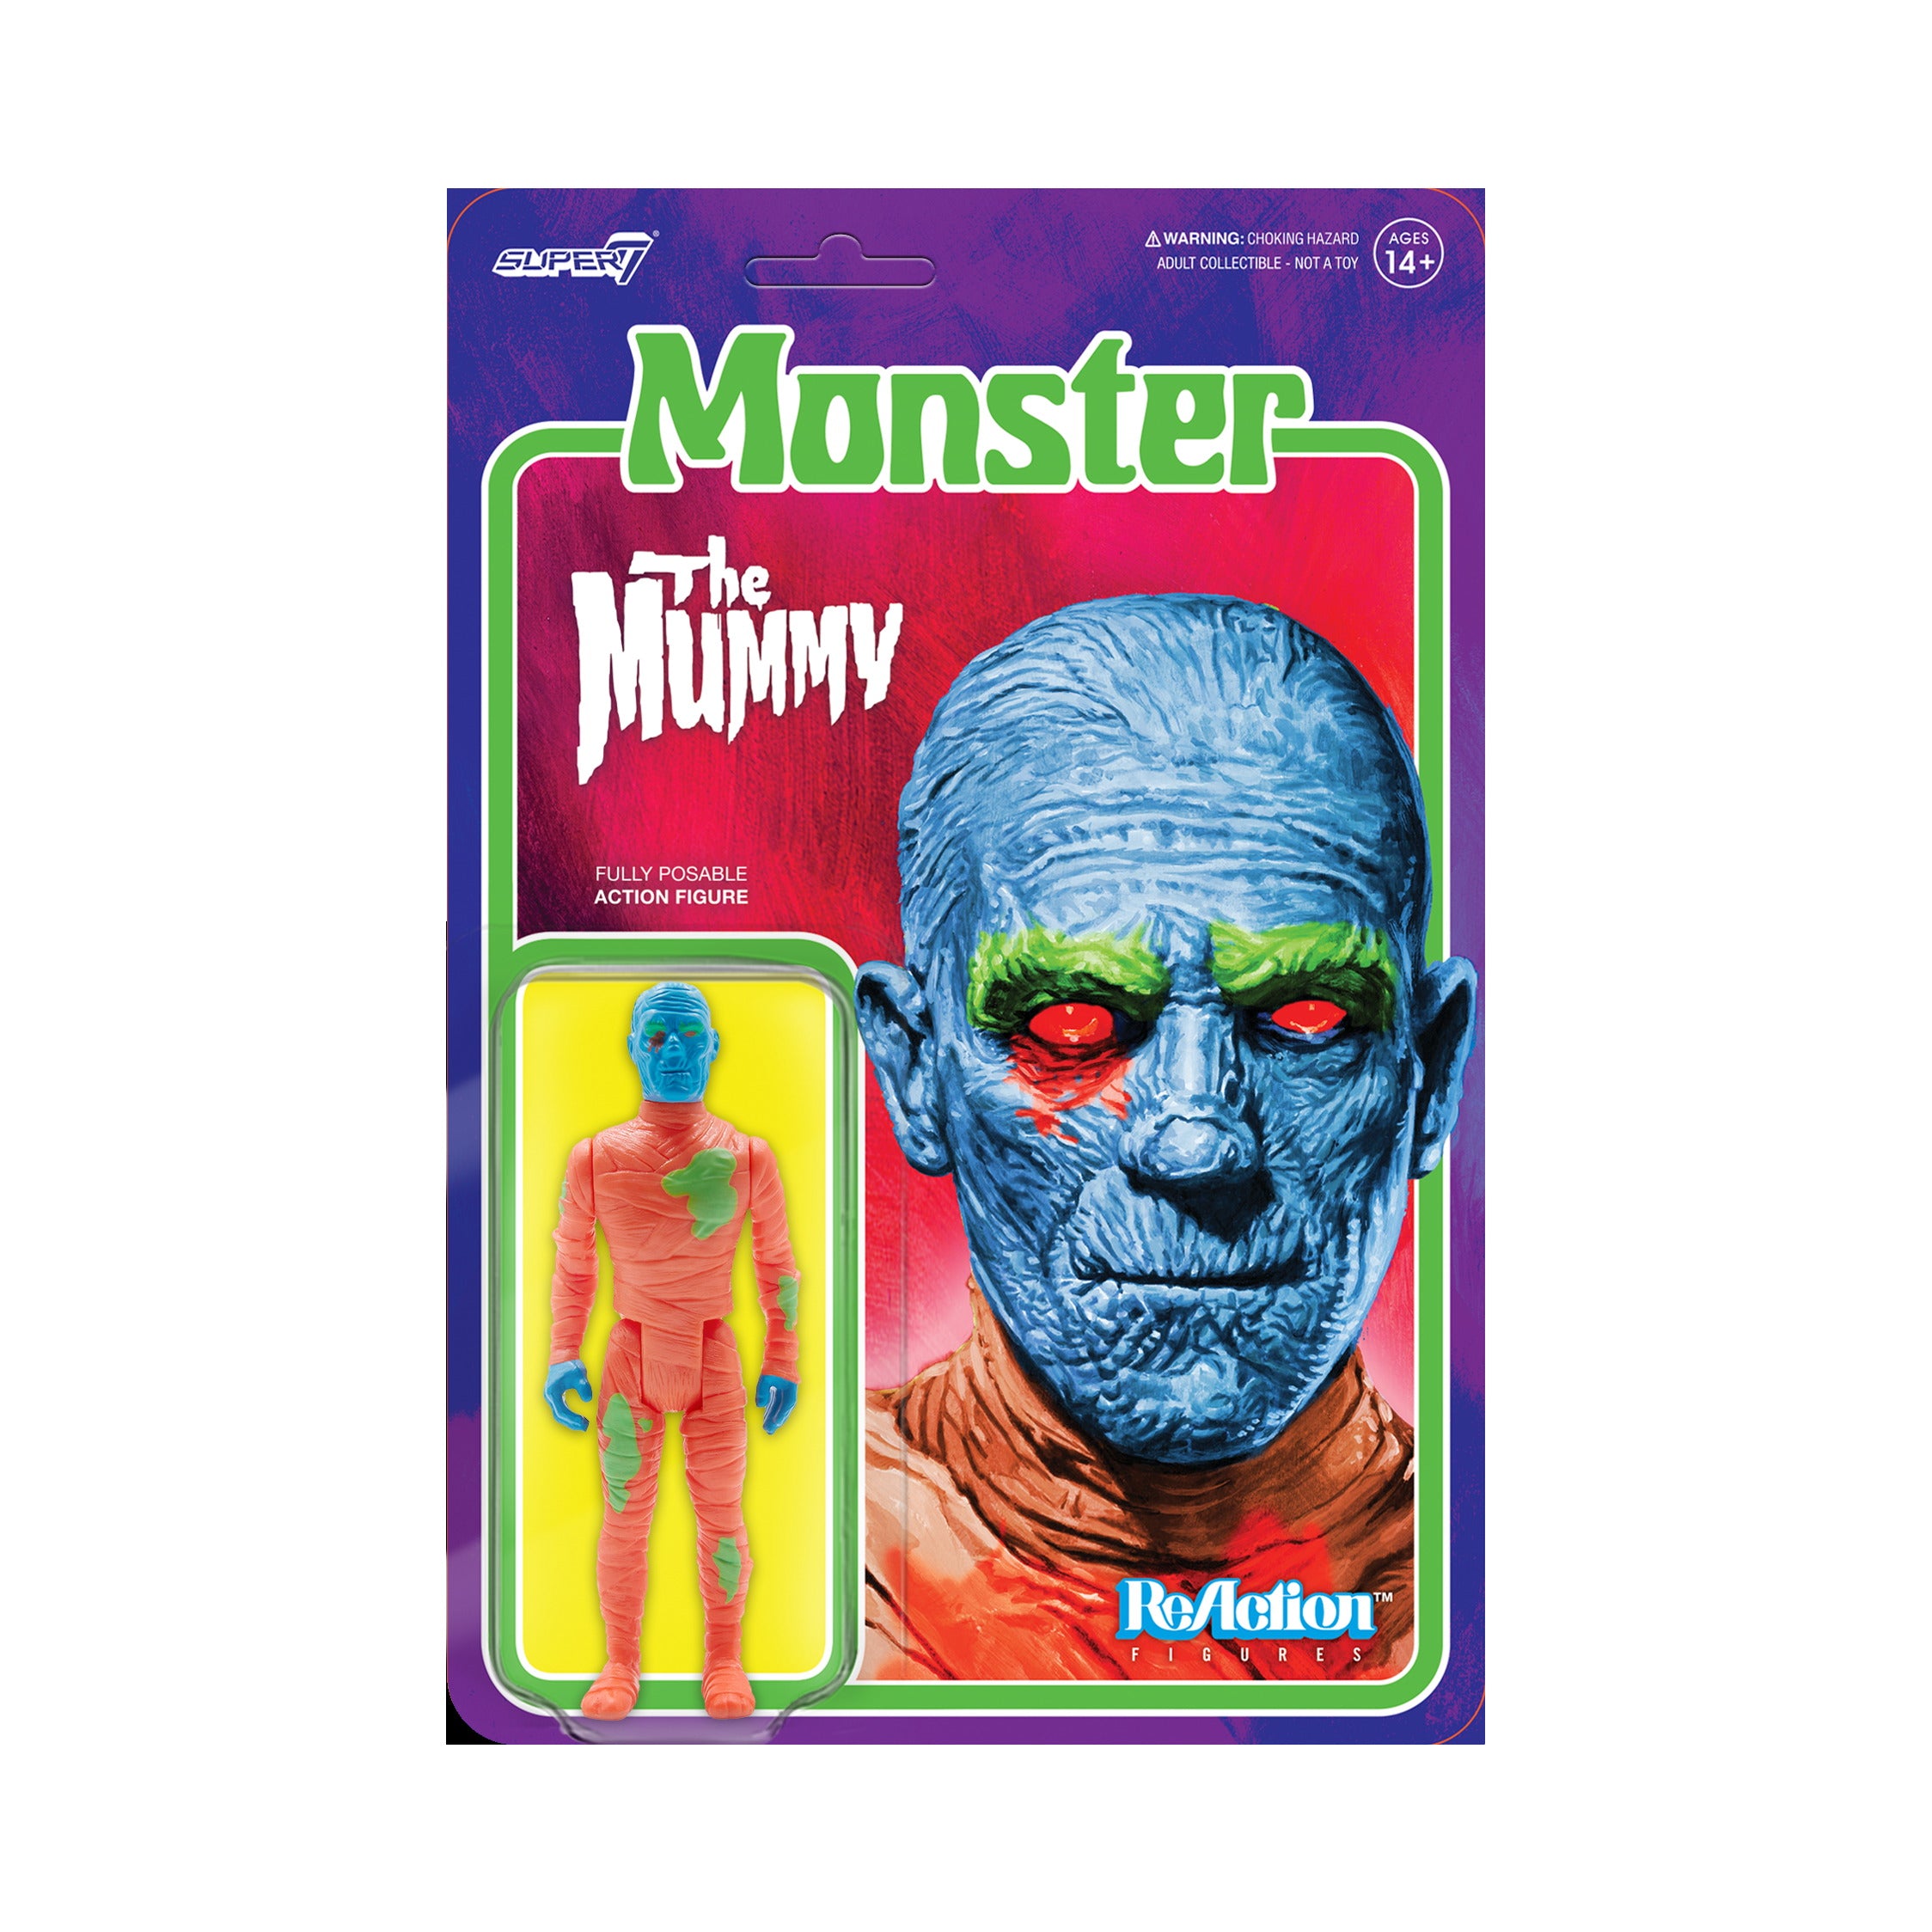 Univ Monsters W5 Mummy Costume Colors Reaction Figure